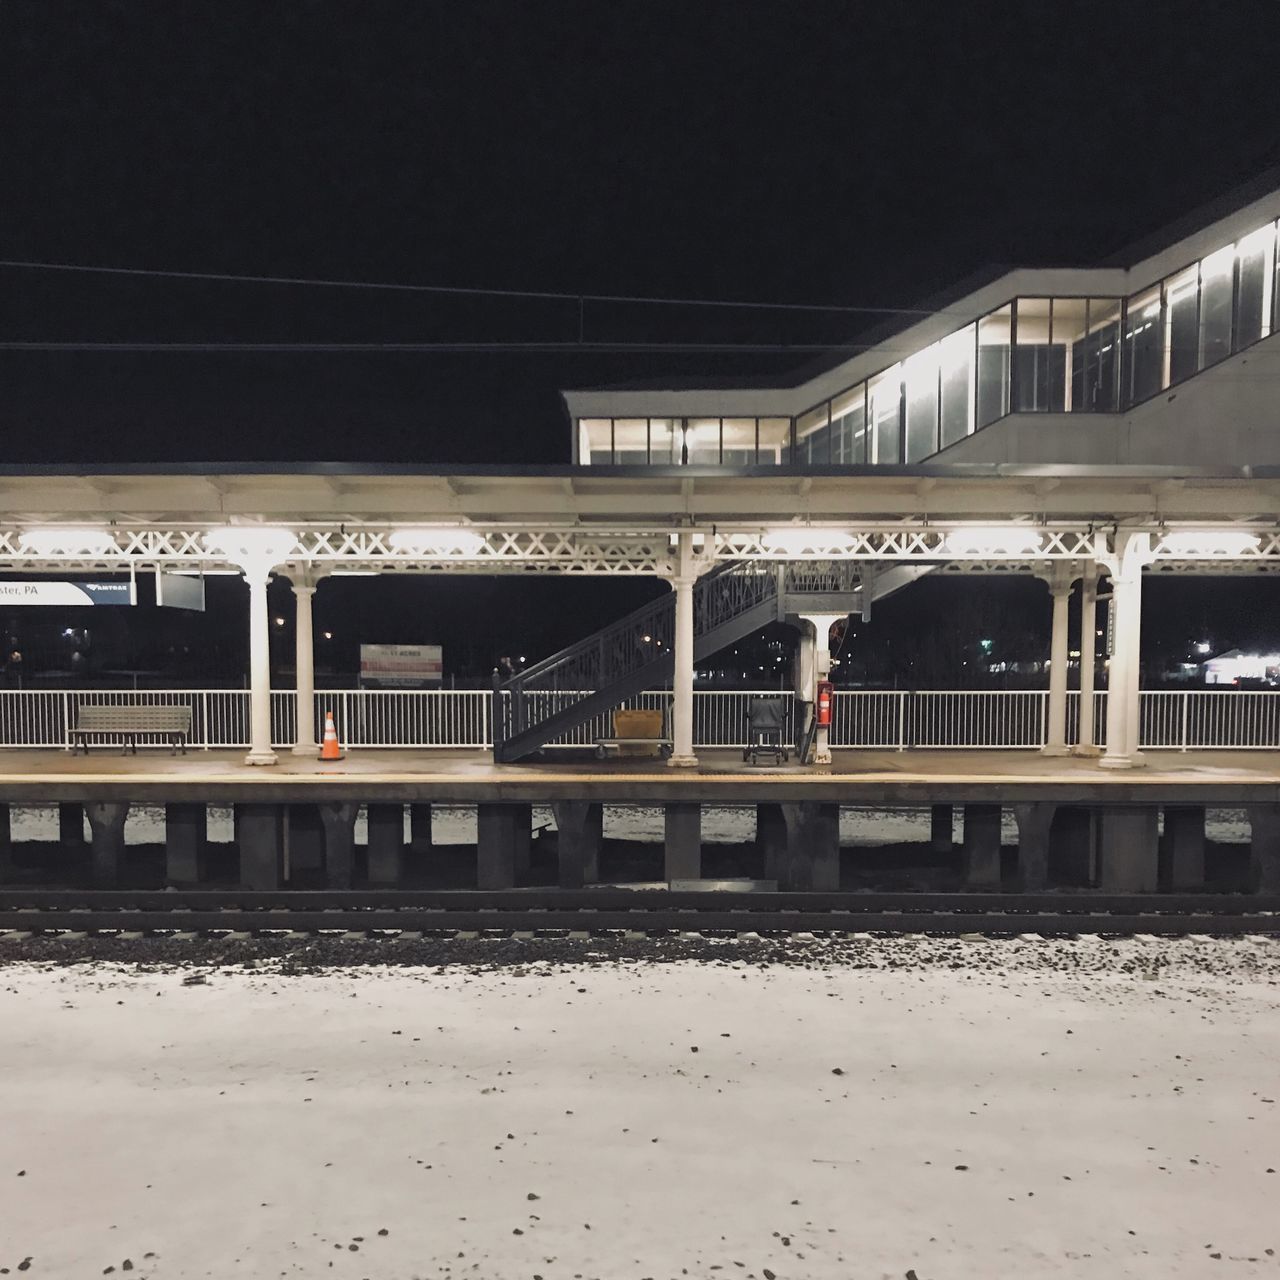 Amtrak: Lancaster Rail Station (LNC)